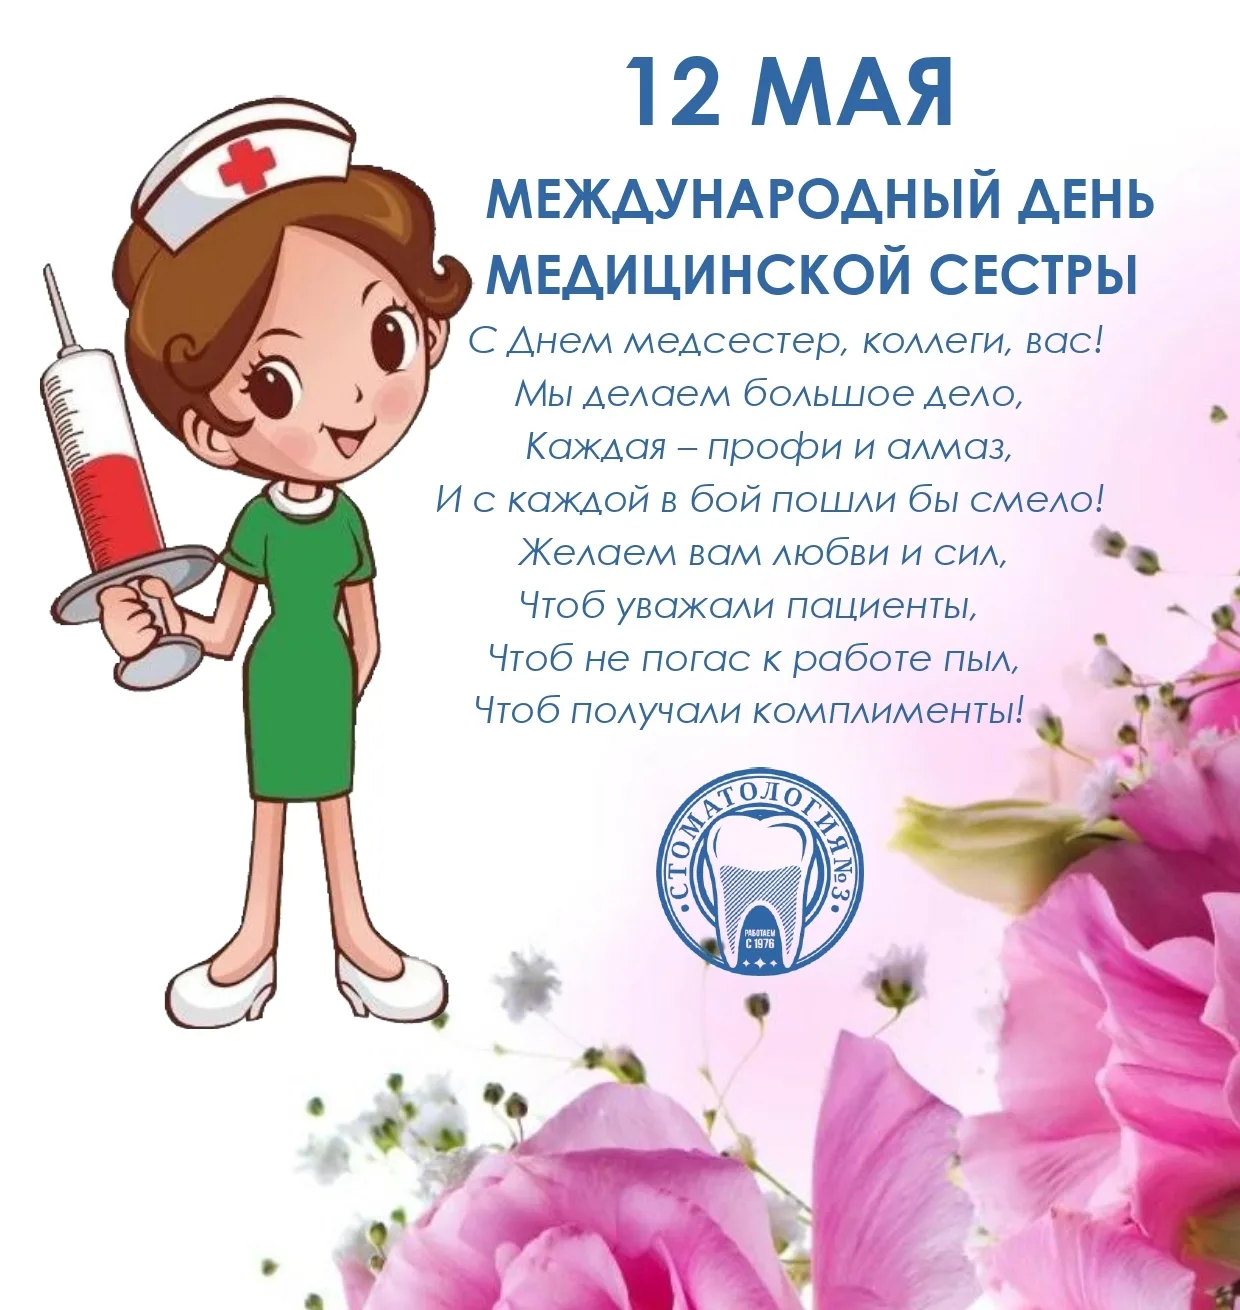 Фото Поздравление с днем рождения медсестре от коллег #53